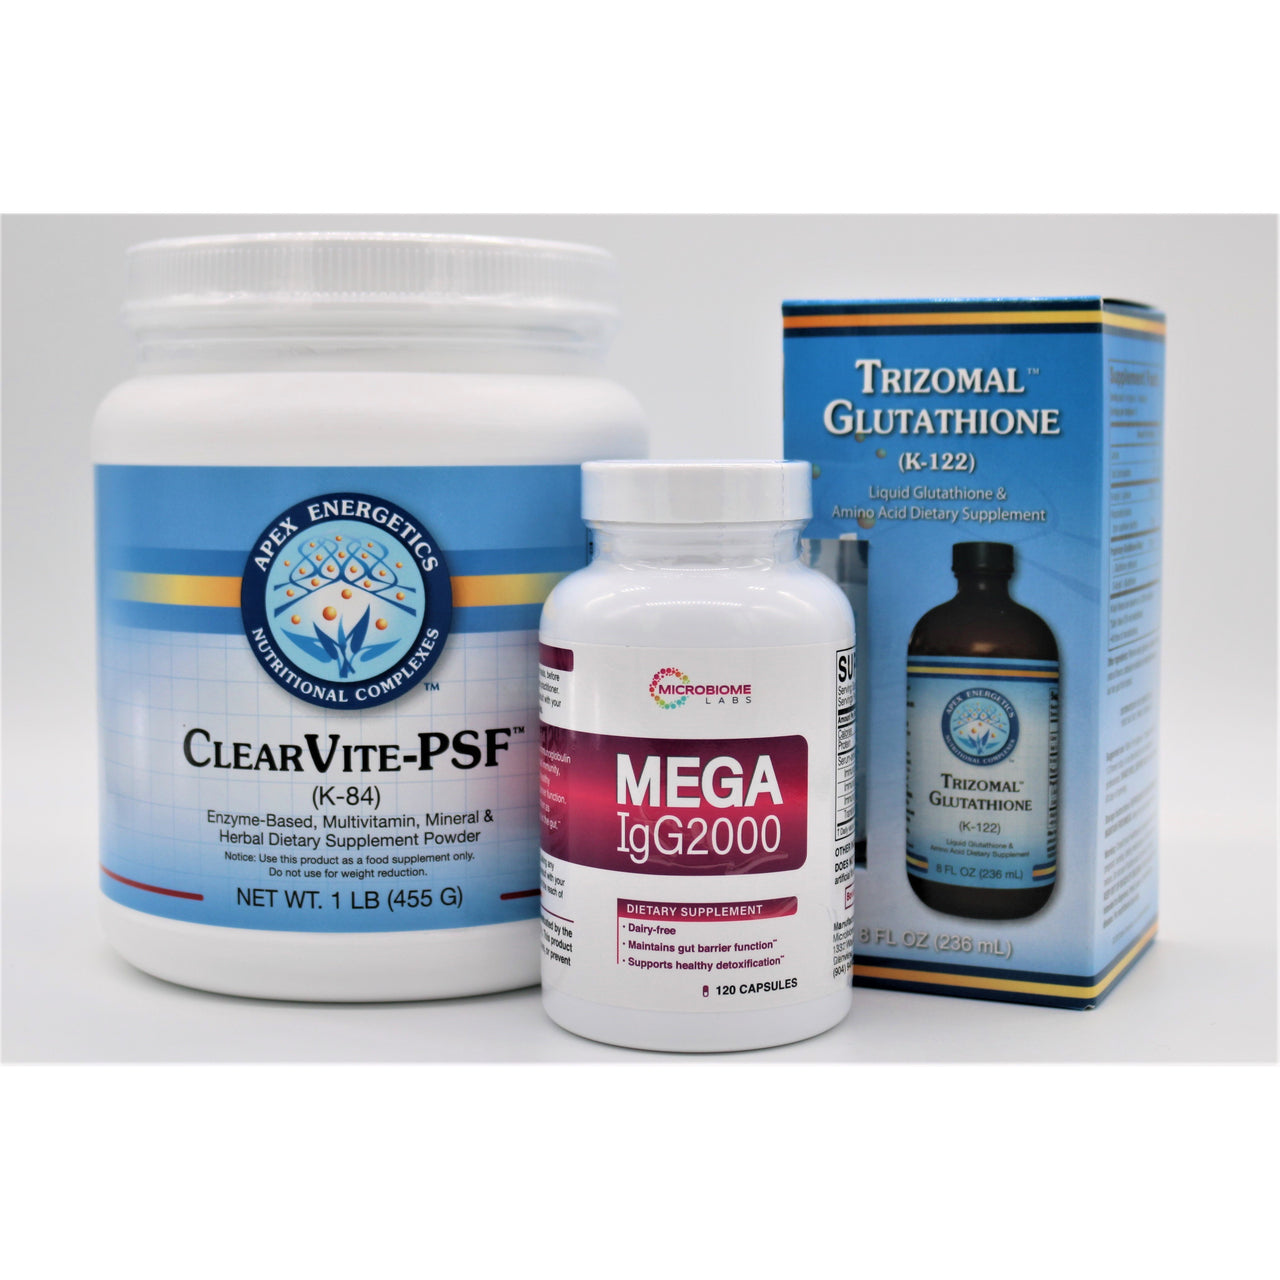 Detox Bundle- Cleavite-PSF, Trizomal Glutathione, Mega IgG2000